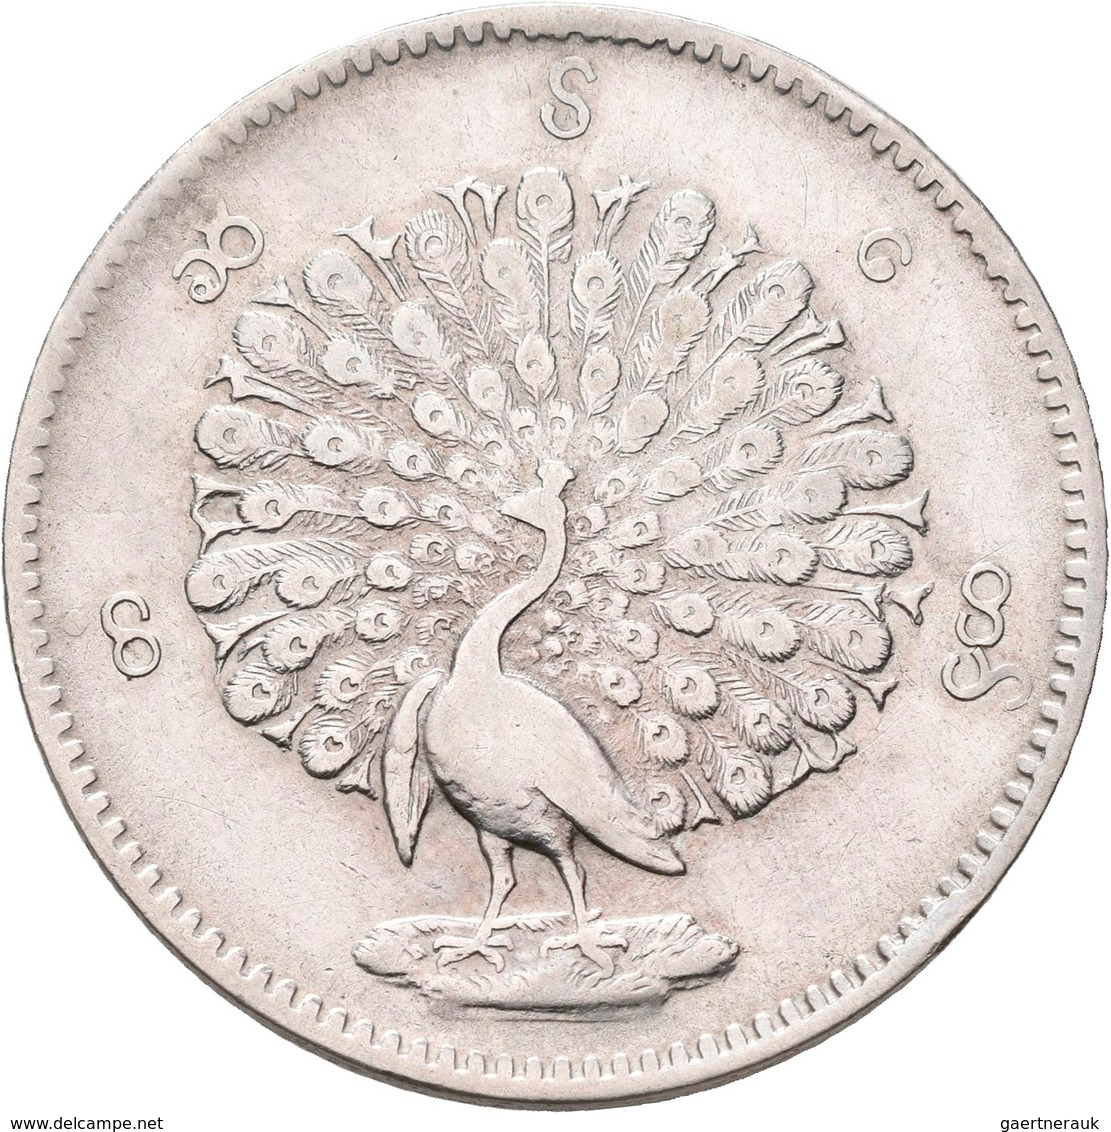 Burma / Myanmar: Lot 4 Münzen, dabei: 1 Kyat (1 Rupee), KM# 10; 1 Mat, KM# 8 ; 1 Mu, KM# 7 und 1 Pe,